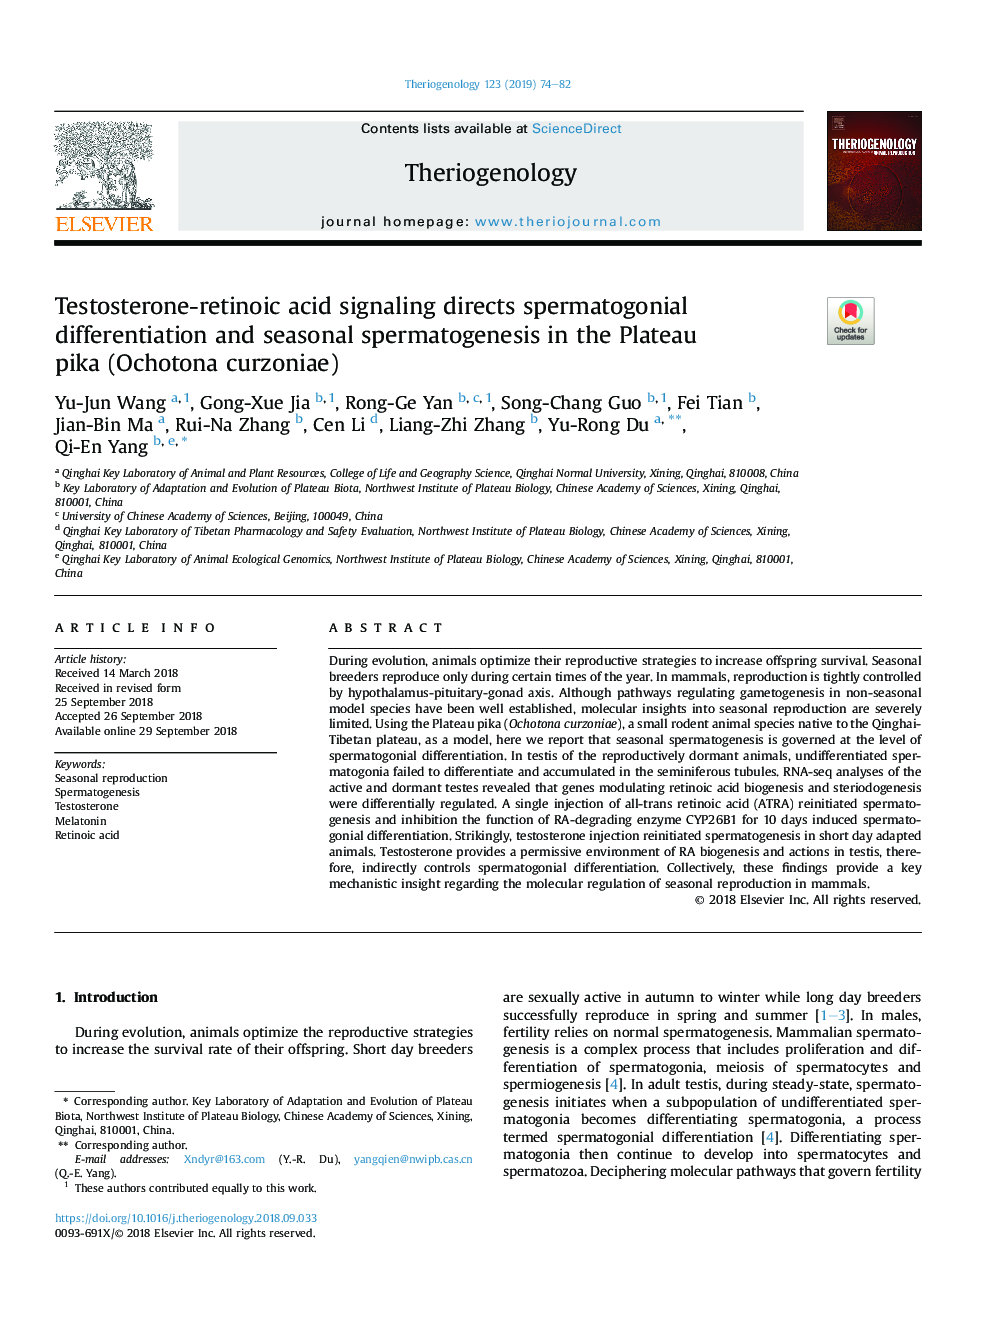 Testosterone-retinoic acid signaling directs spermatogonial differentiation and seasonal spermatogenesis in the Plateau pikaÂ (Ochotona curzoniae)